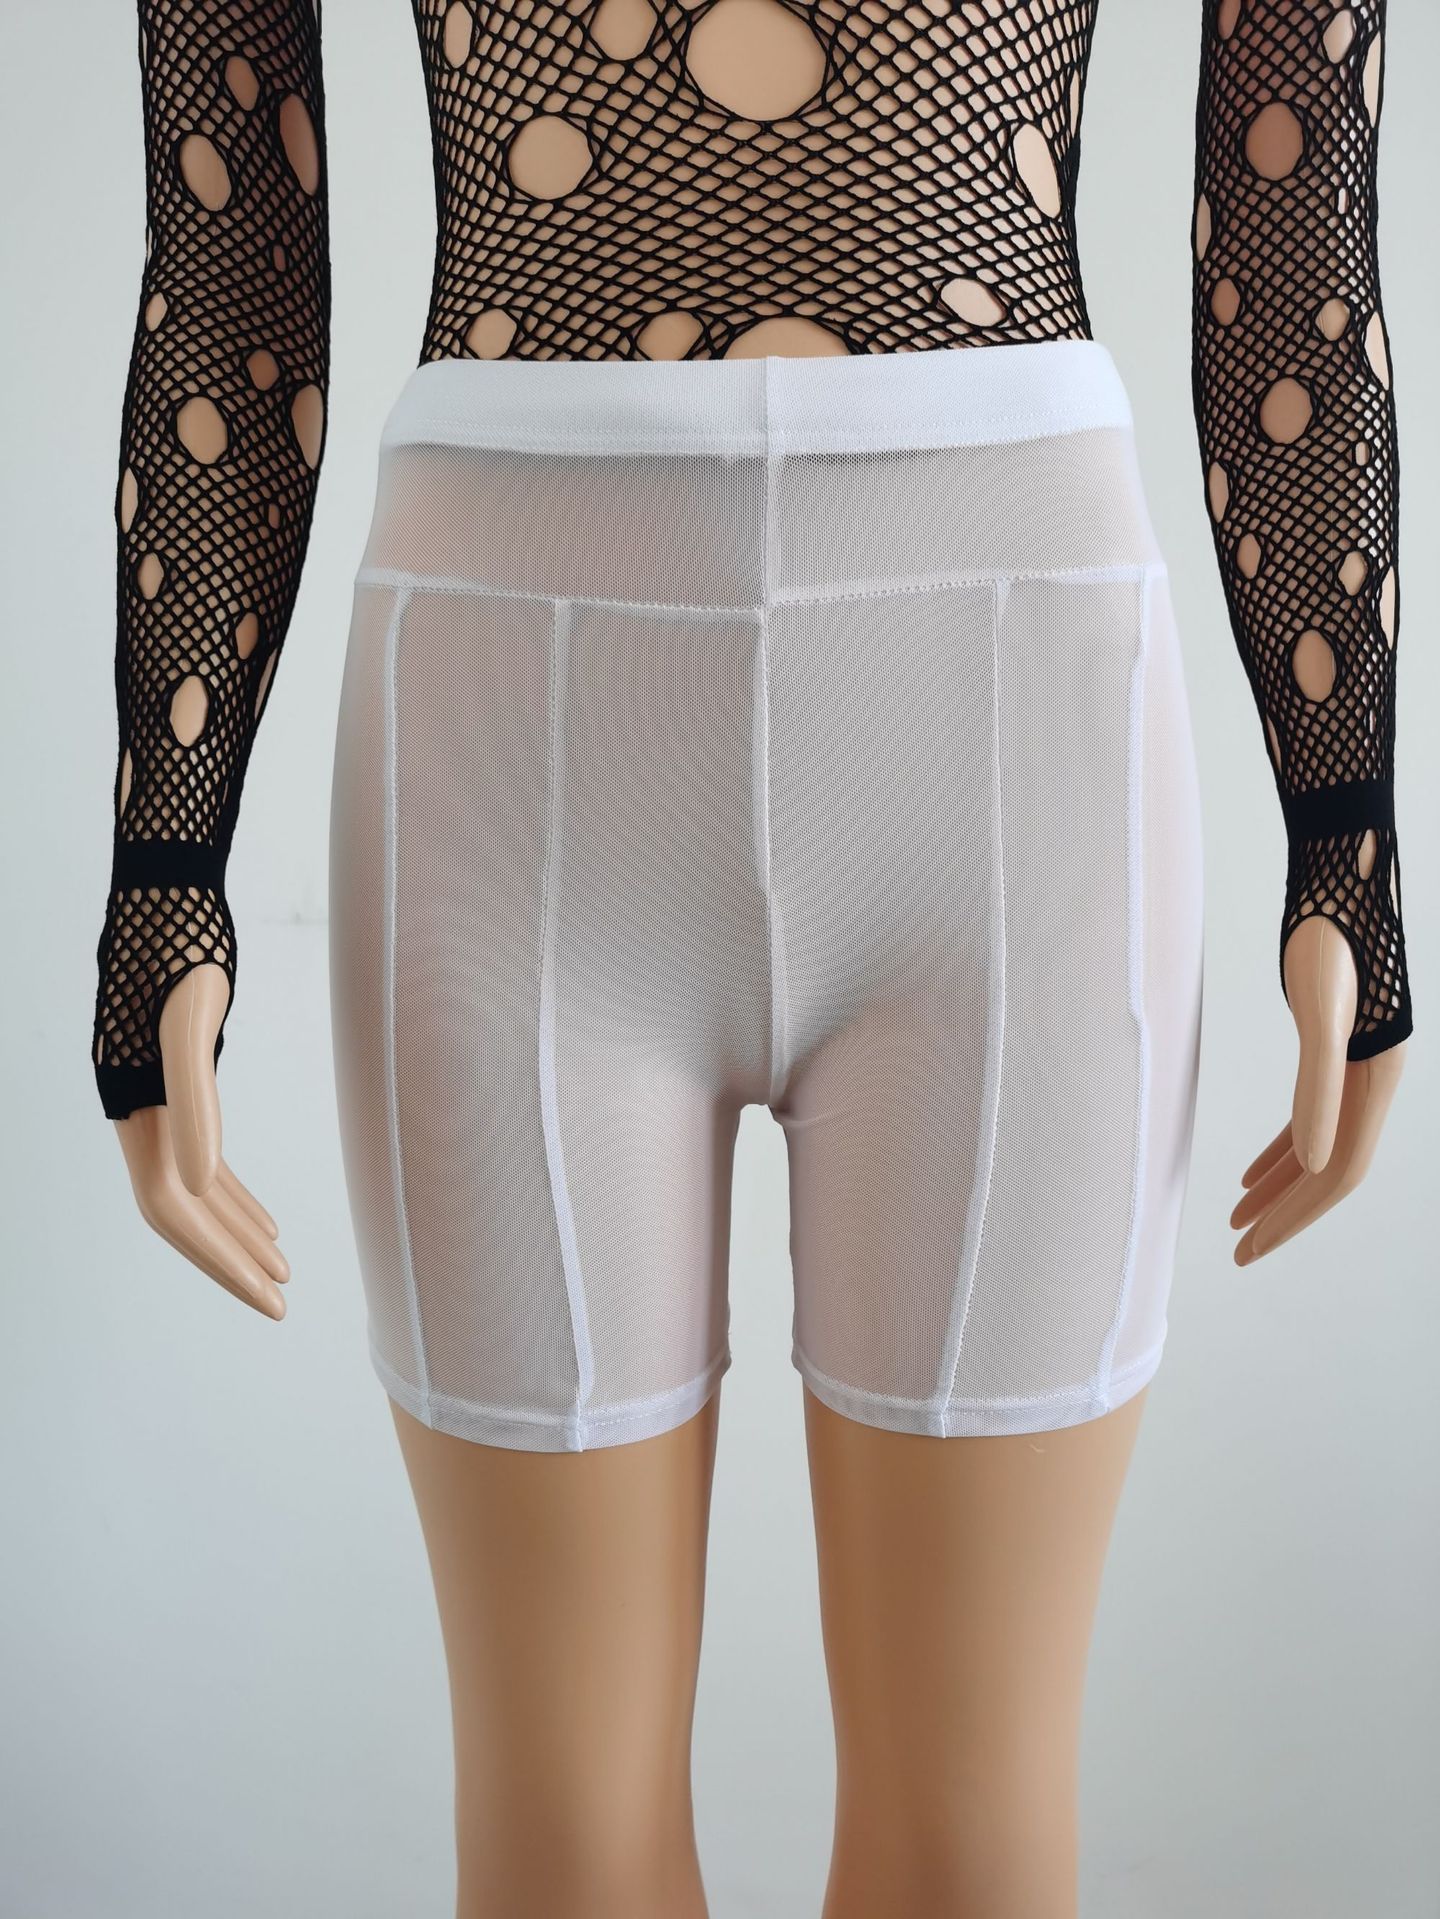 Sexy Women Sheer Mesh See Through Hot Half Pants Fishnet Underwear